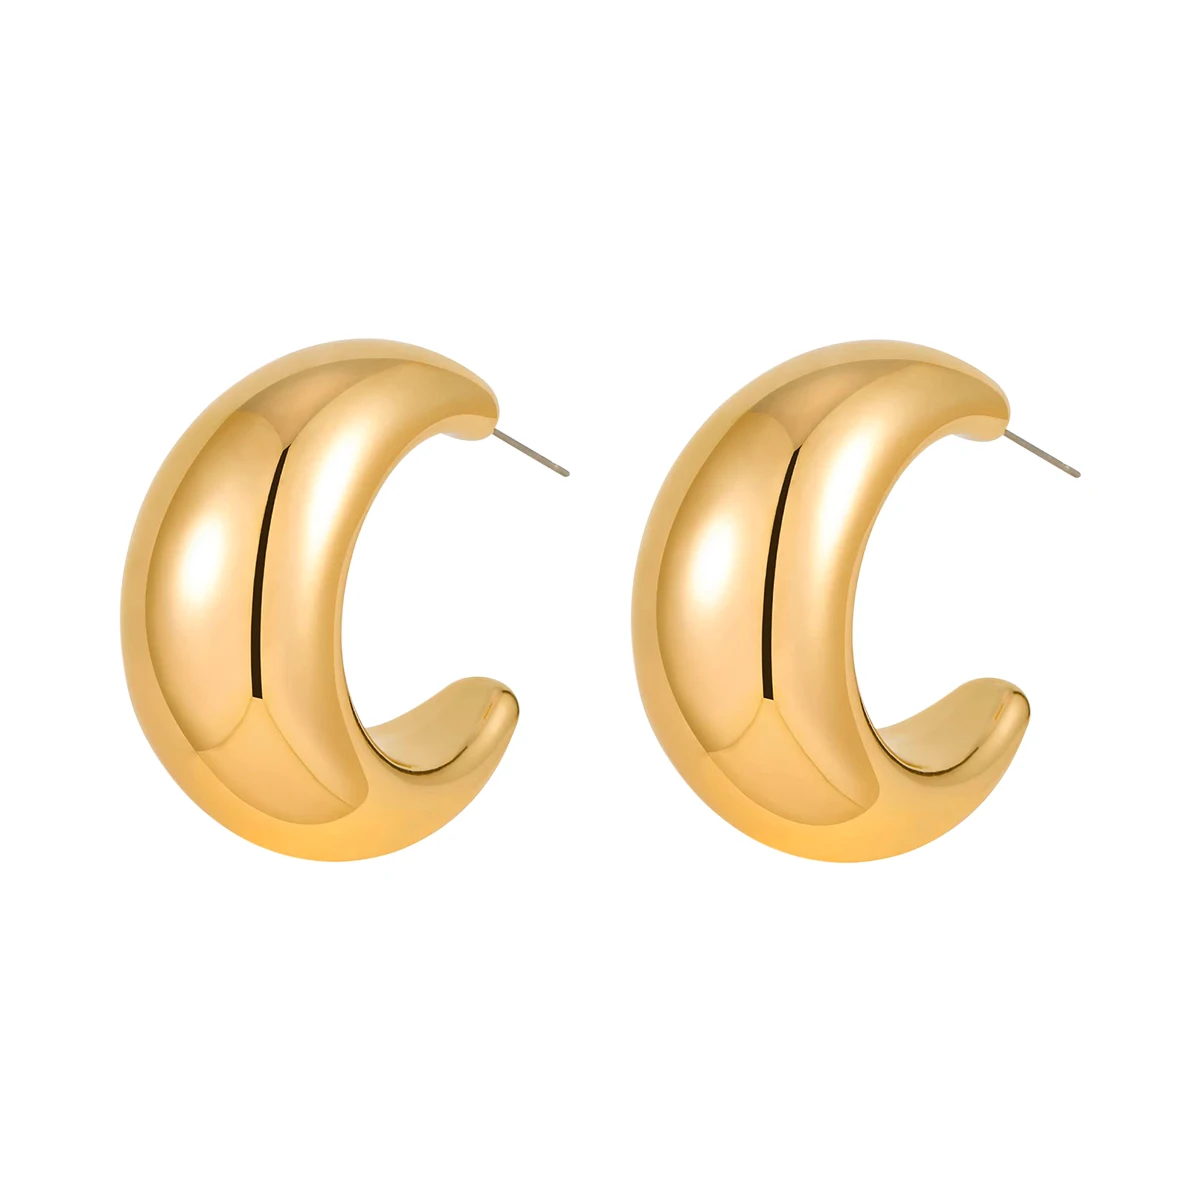 

J&D Stainless steel Statement Earrings Extra Large Stud Earrings For Women 18K Gold Hoop Moon Earrings